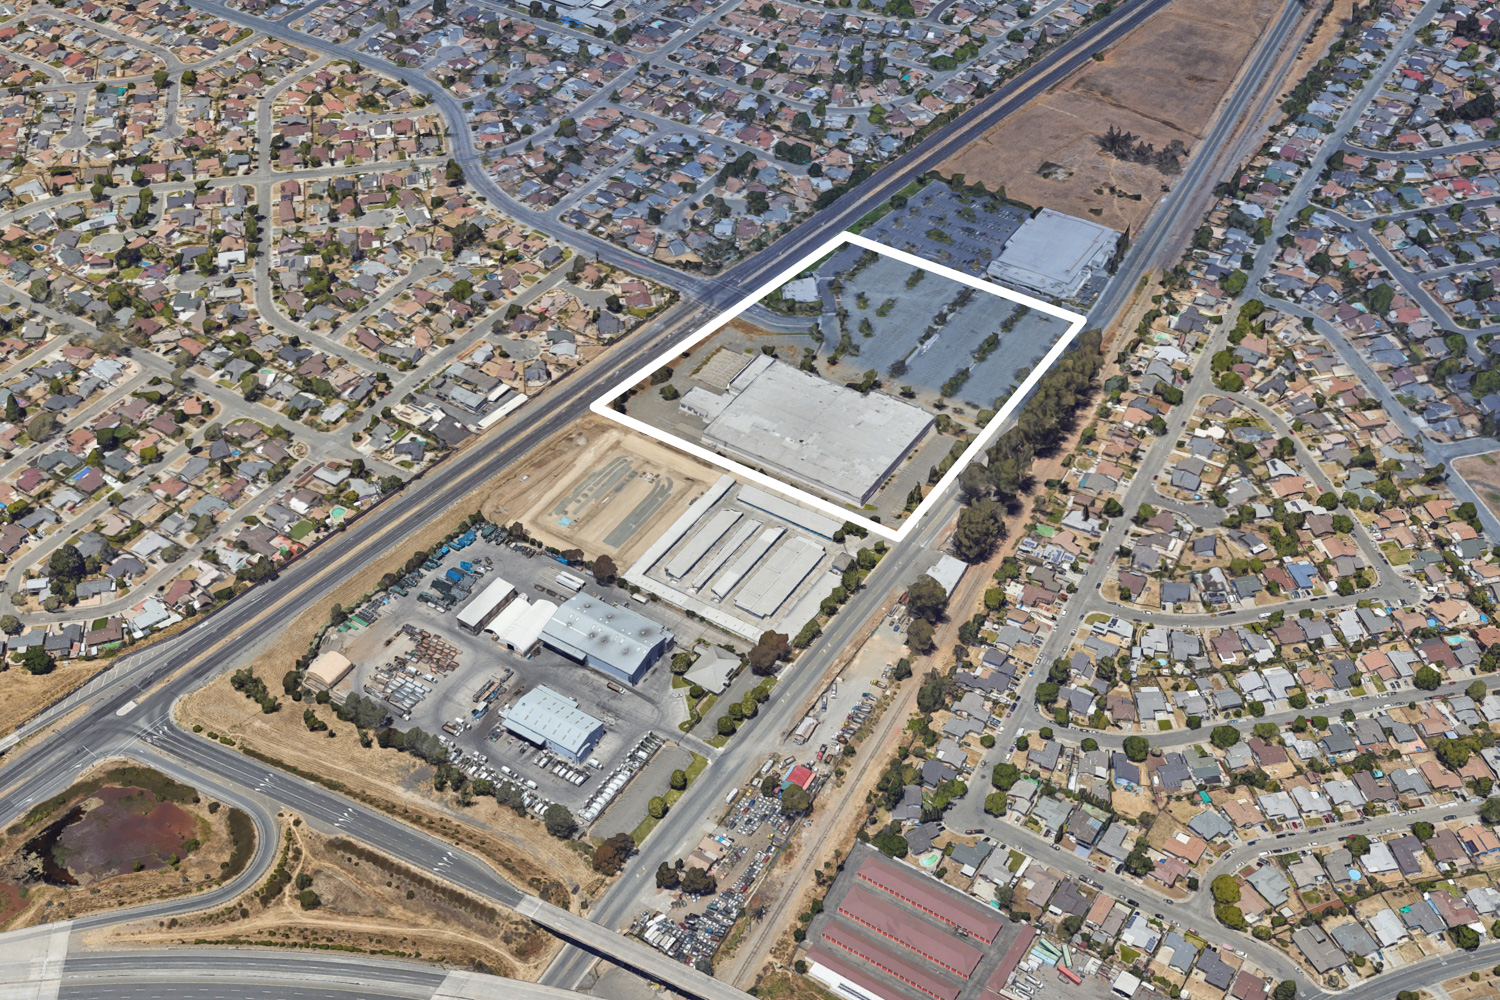 5180 Sonoma Boulevard aerial view, image by Google Satellite